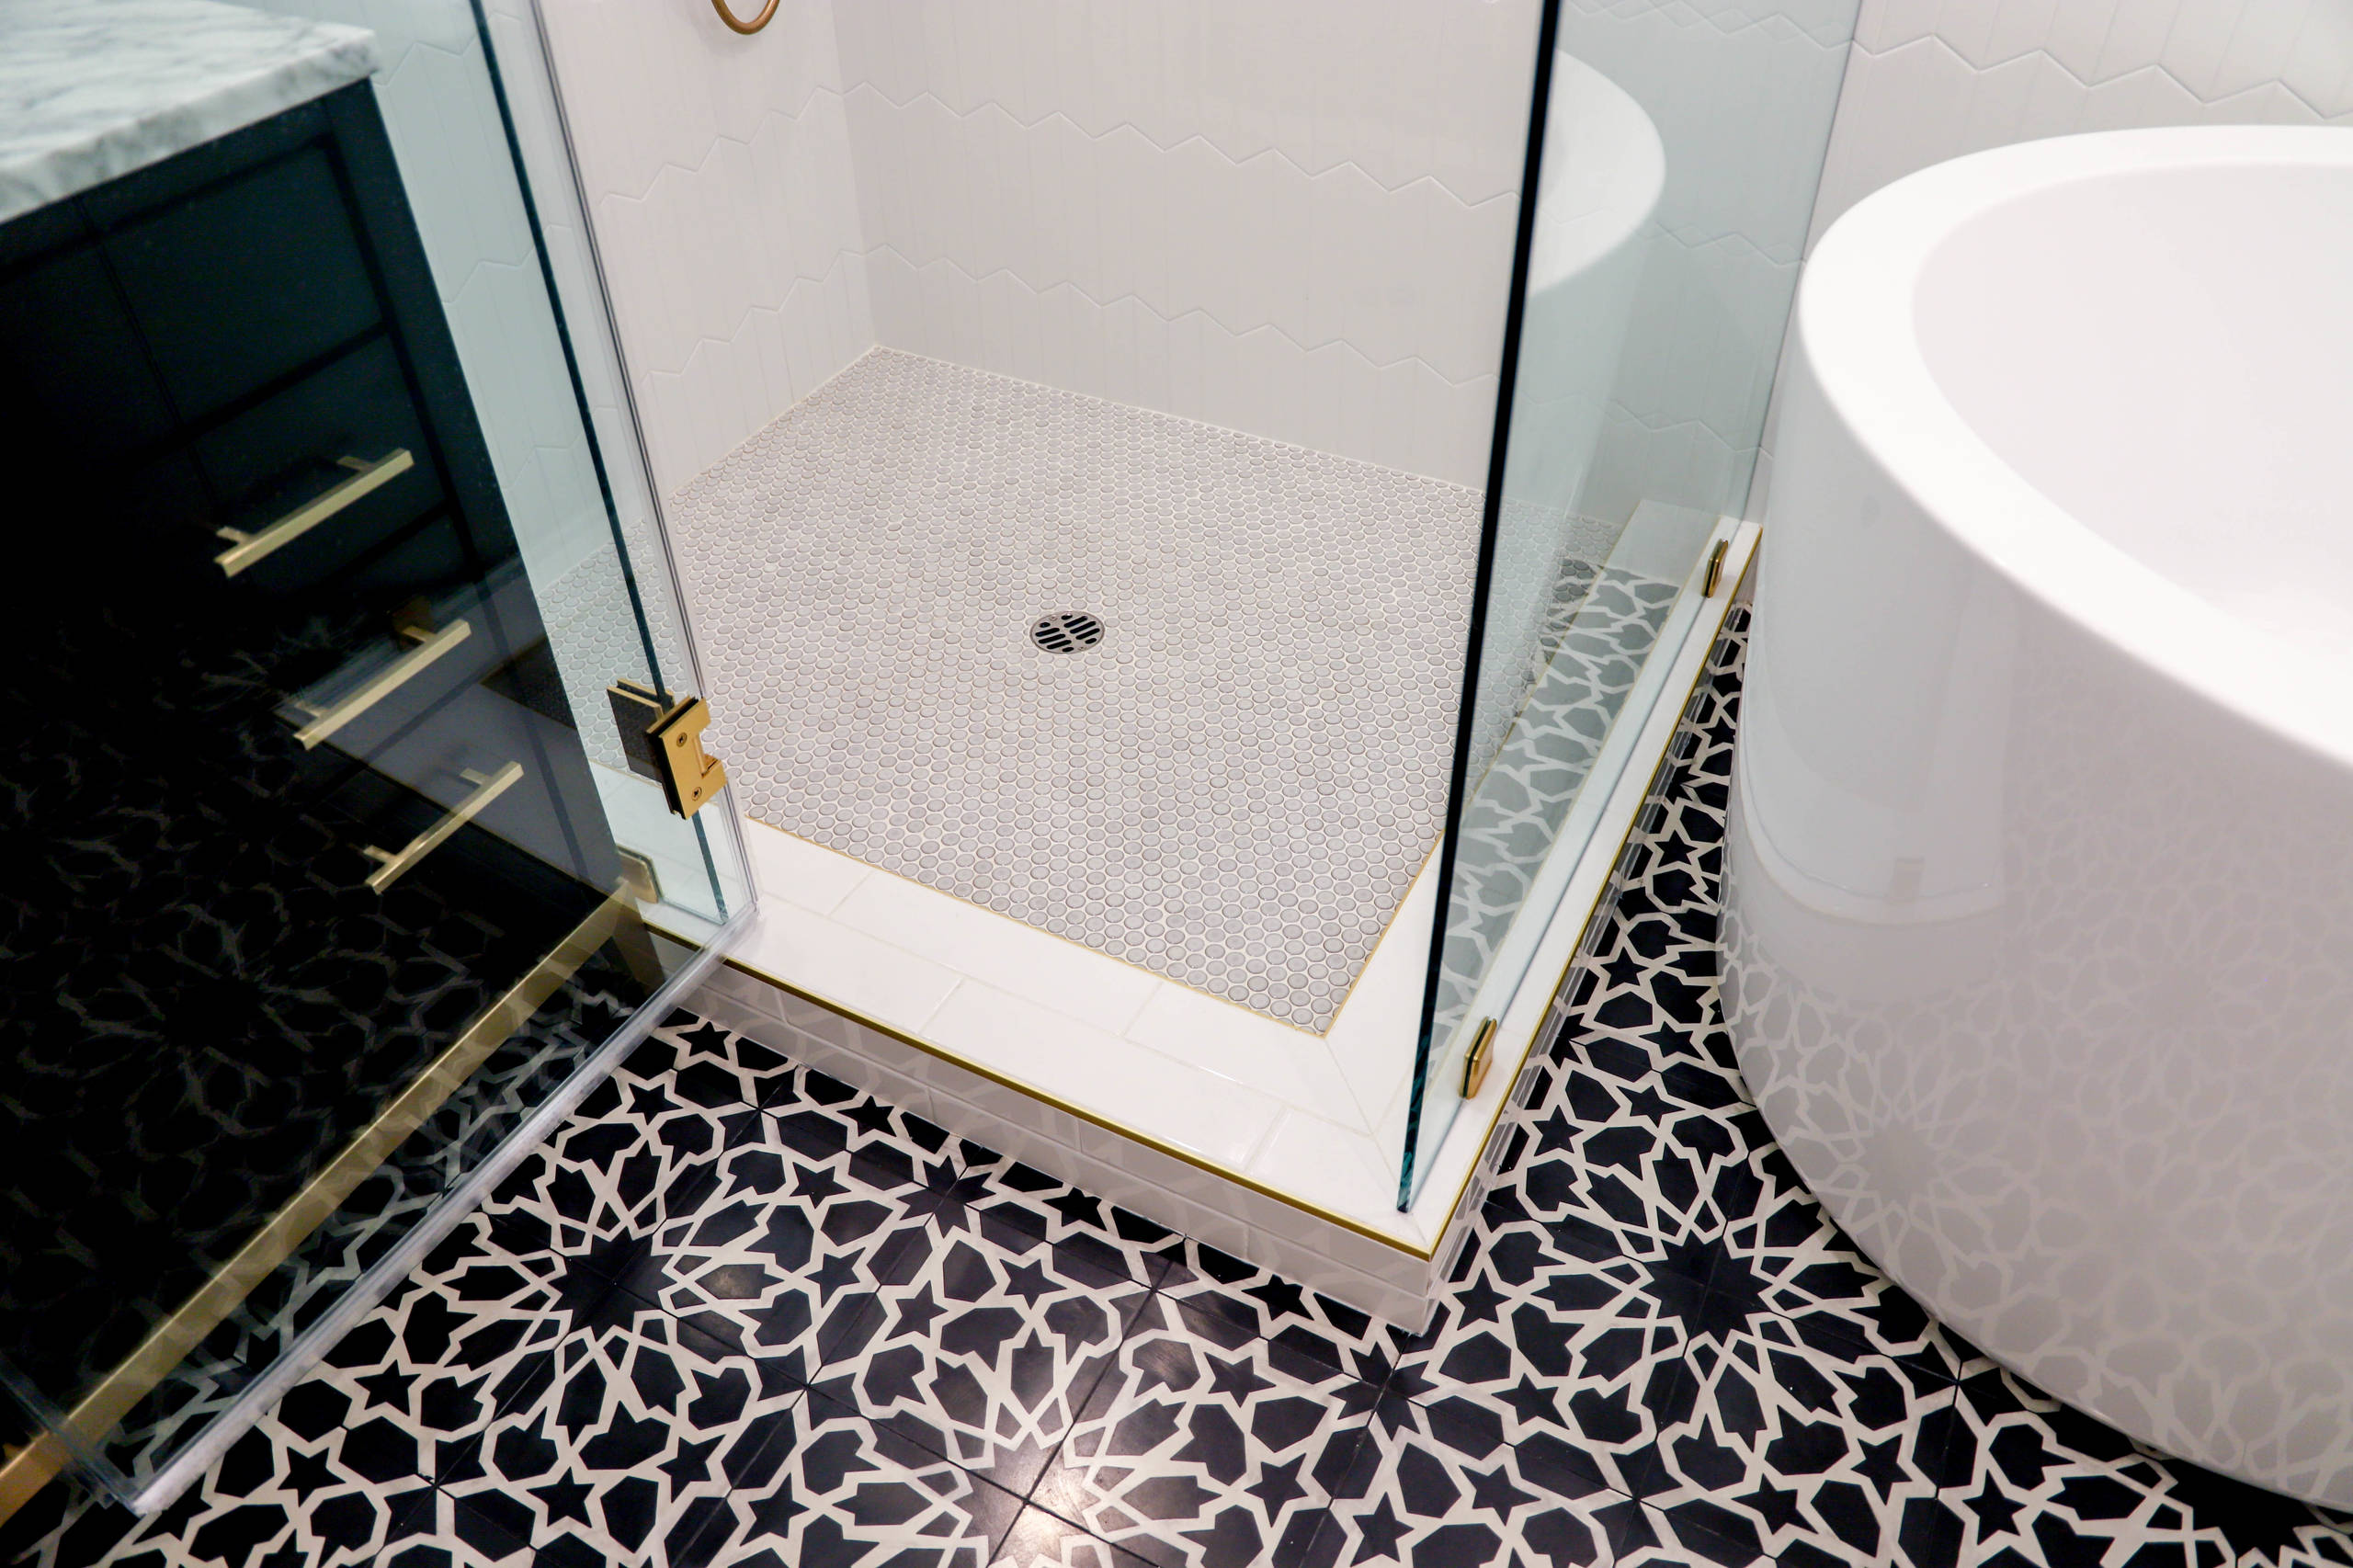 Decorative Floor Tiles, Japanese Soaking Tub, Tiled Shower & Hardwood Vanity